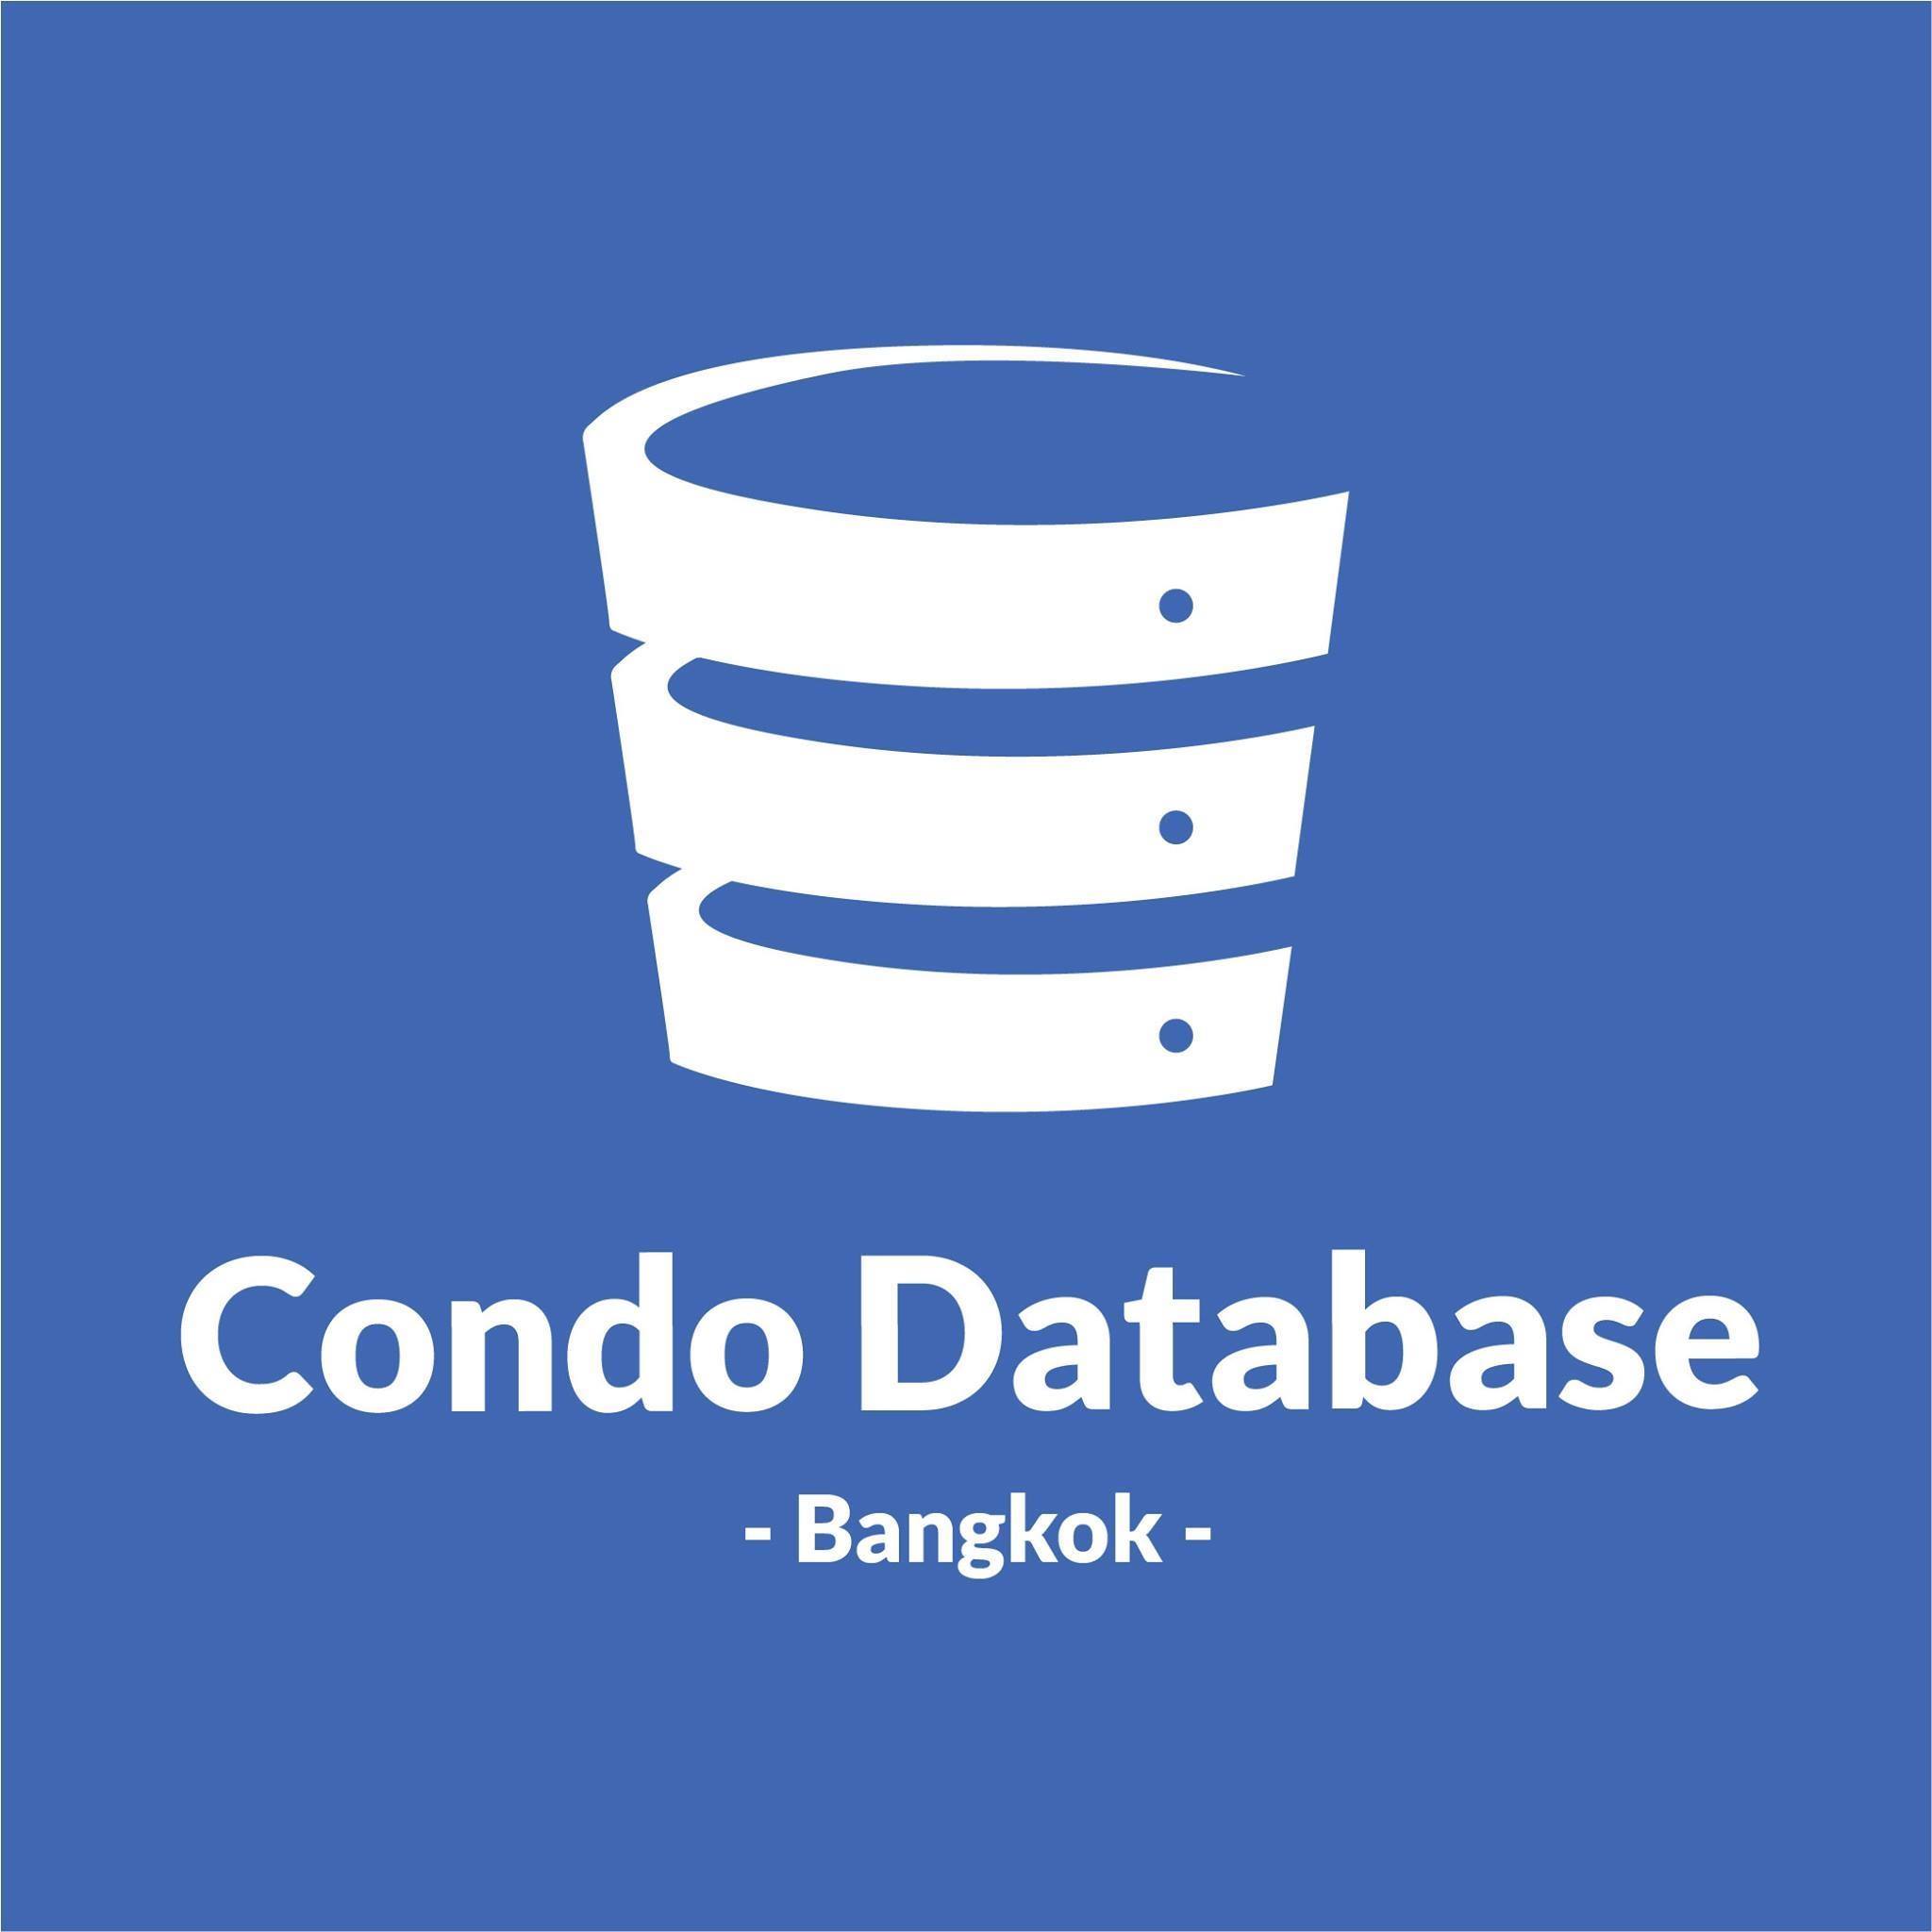 Condo Database